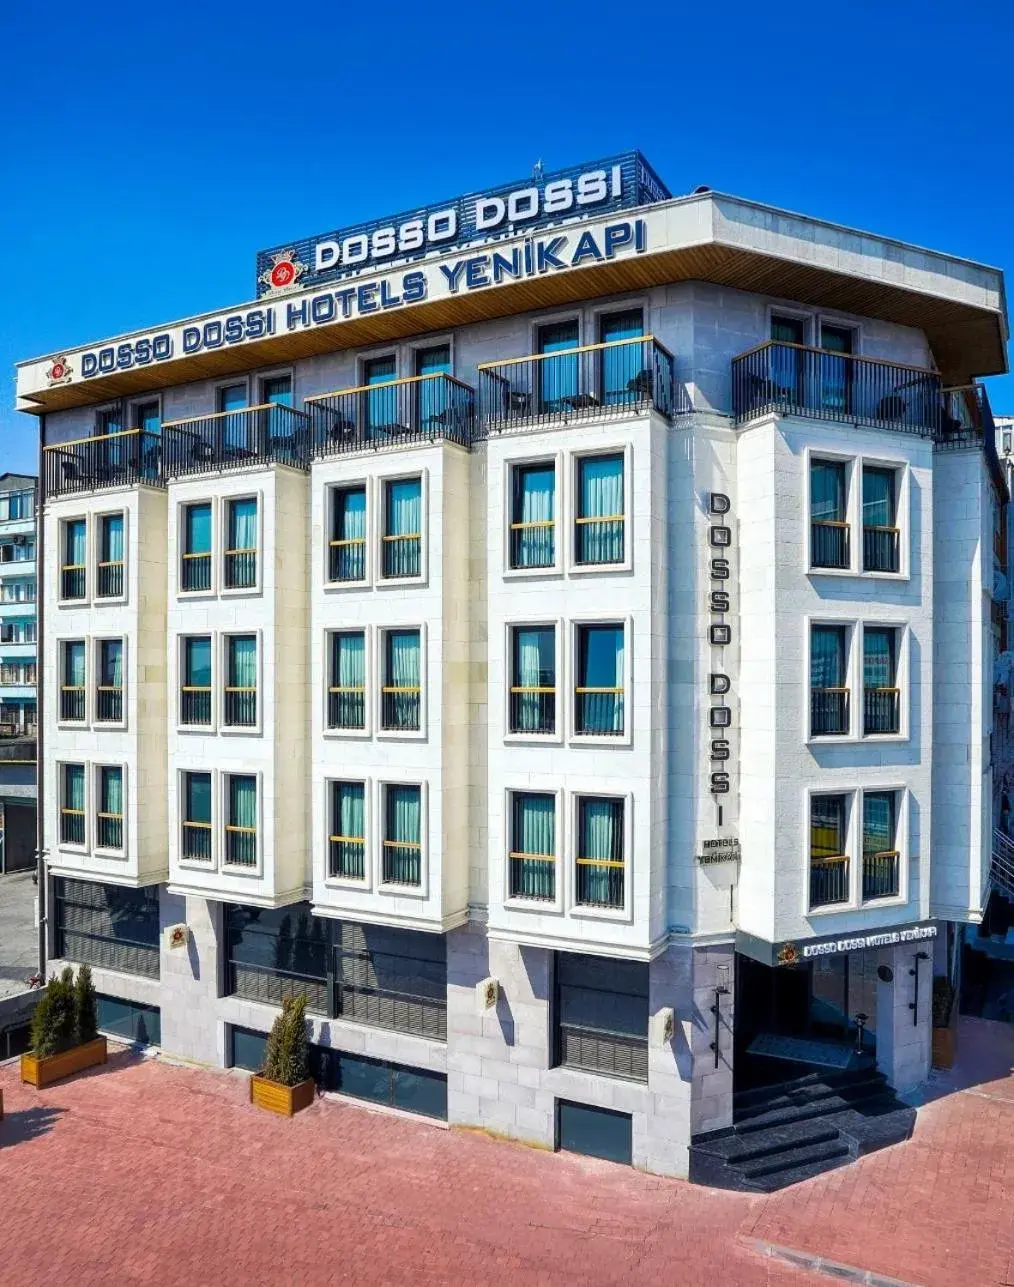 Property Building in Dosso Dossi Hotels Yenikapı